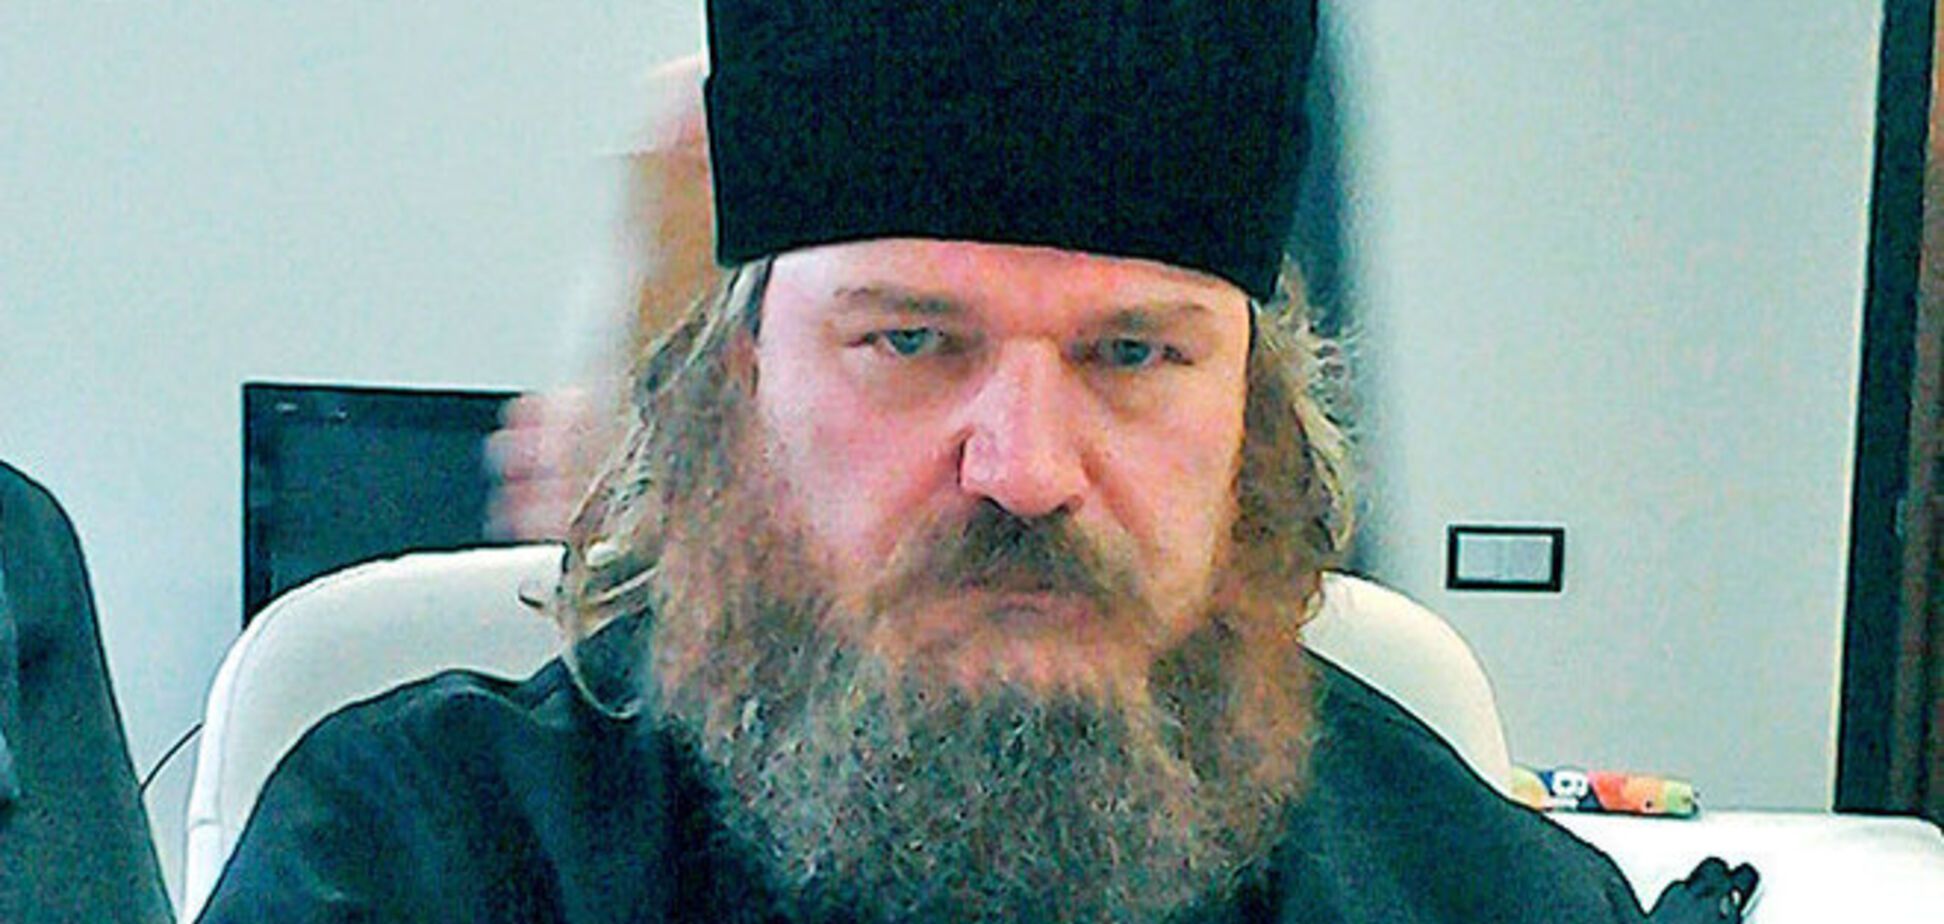 Актер из 'Левиафана' оказался в центре скандала из-за 'поношения православия'